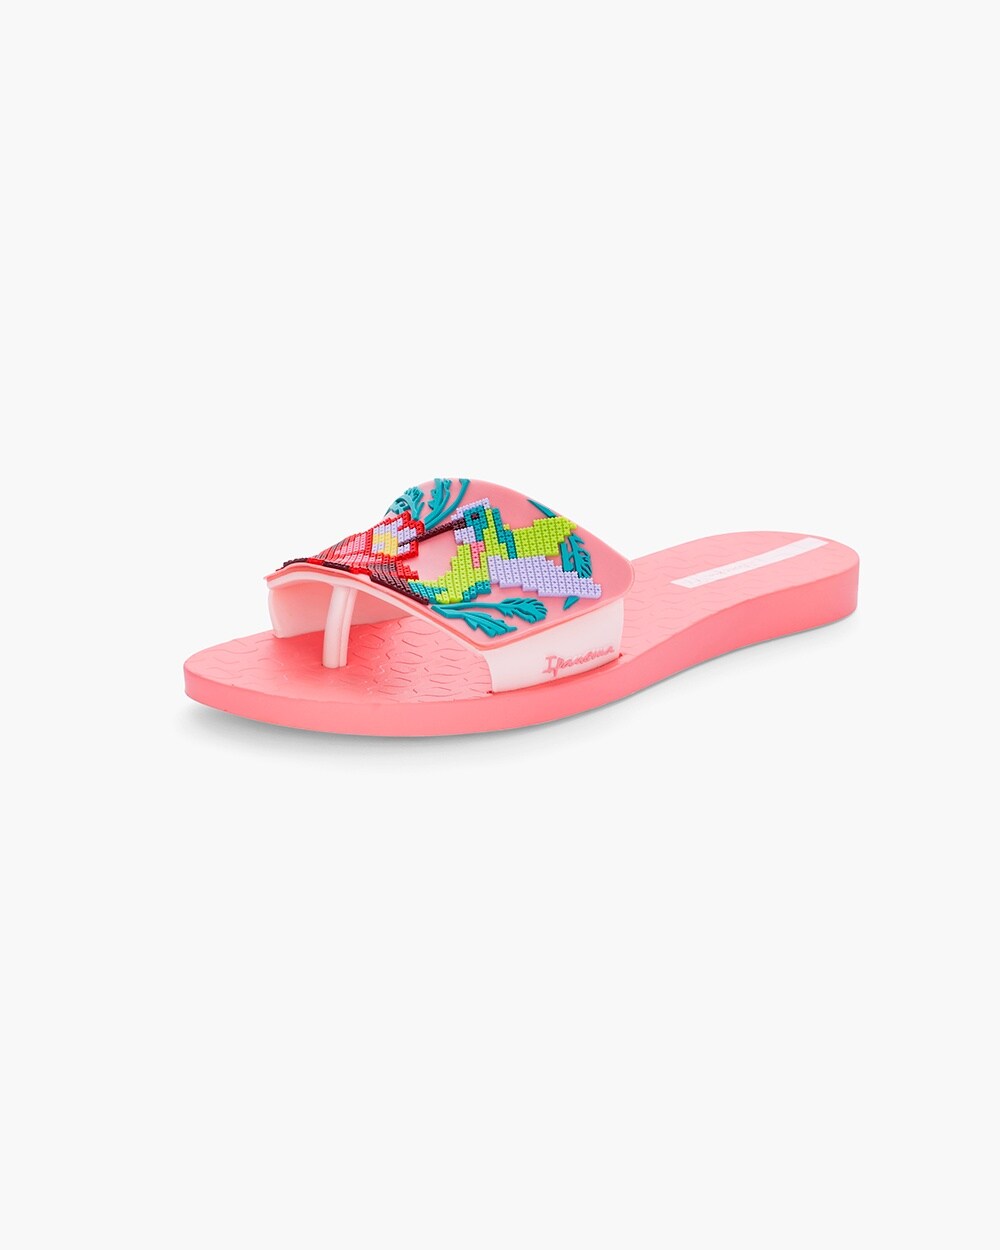 Ipanema Pink Floral Beach Sandals